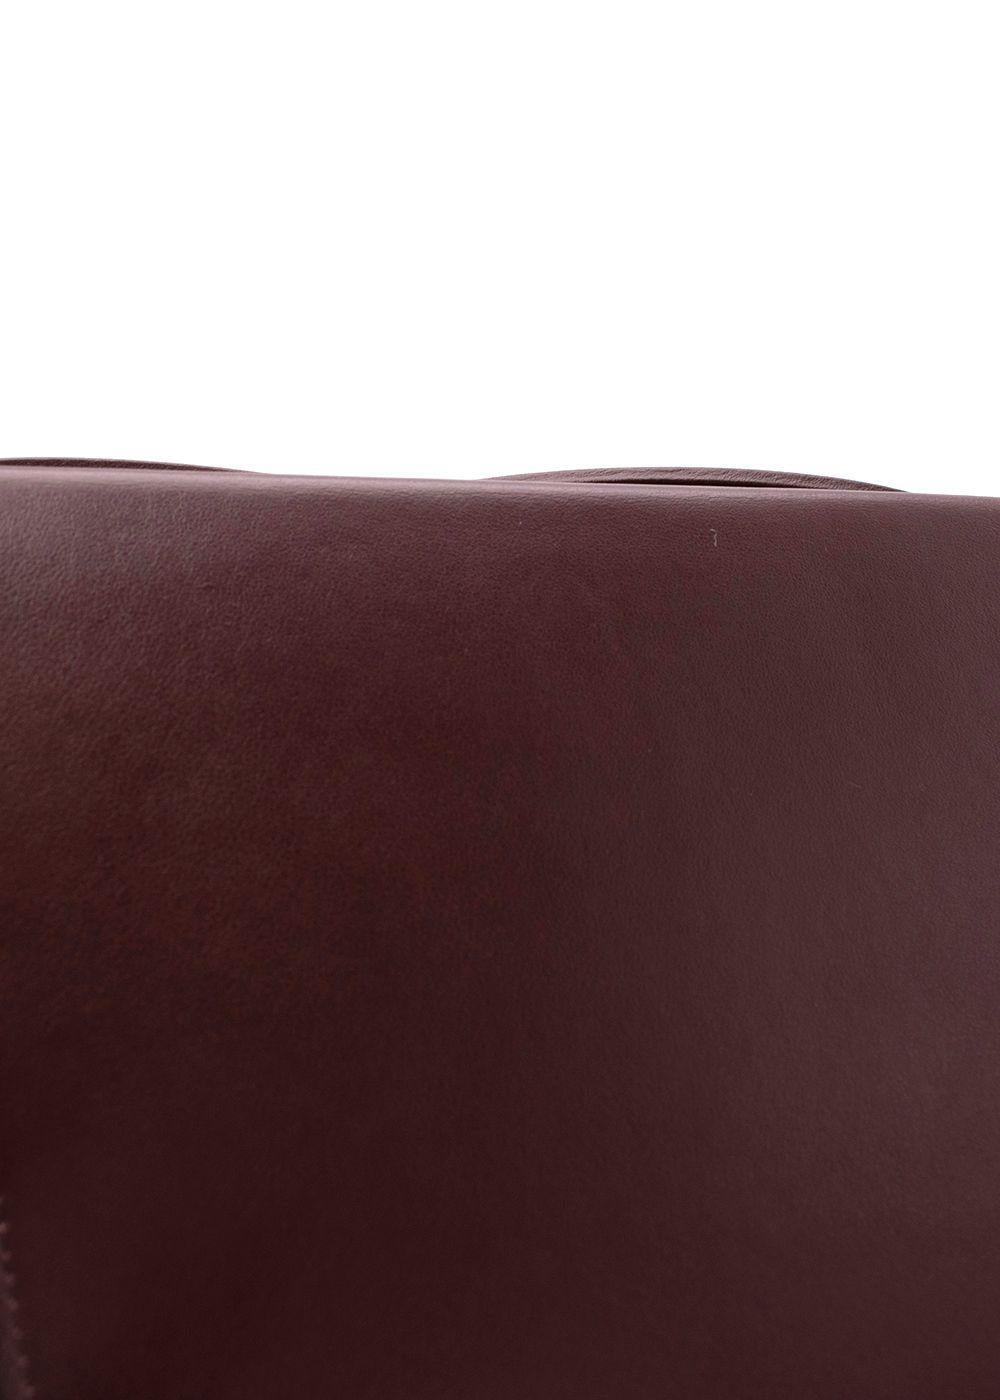 Roksanda Ilincic Burgundy Leather Flat Box Bag In New Condition For Sale In London, GB